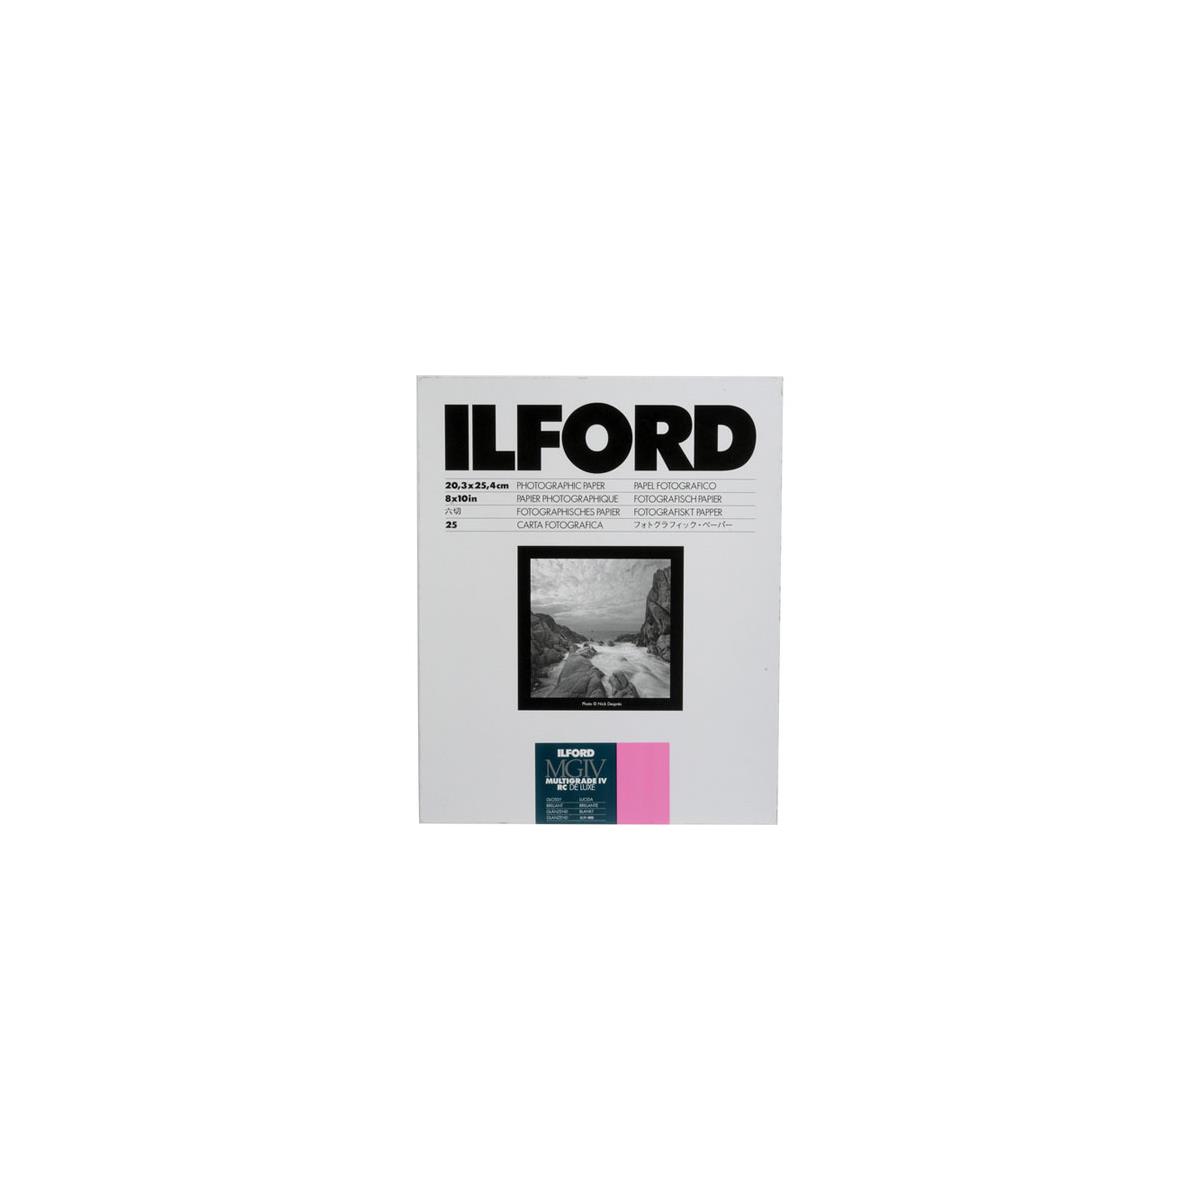 Ilford 1178274 8x10 RC Glossy 25+5  (30) Sheet